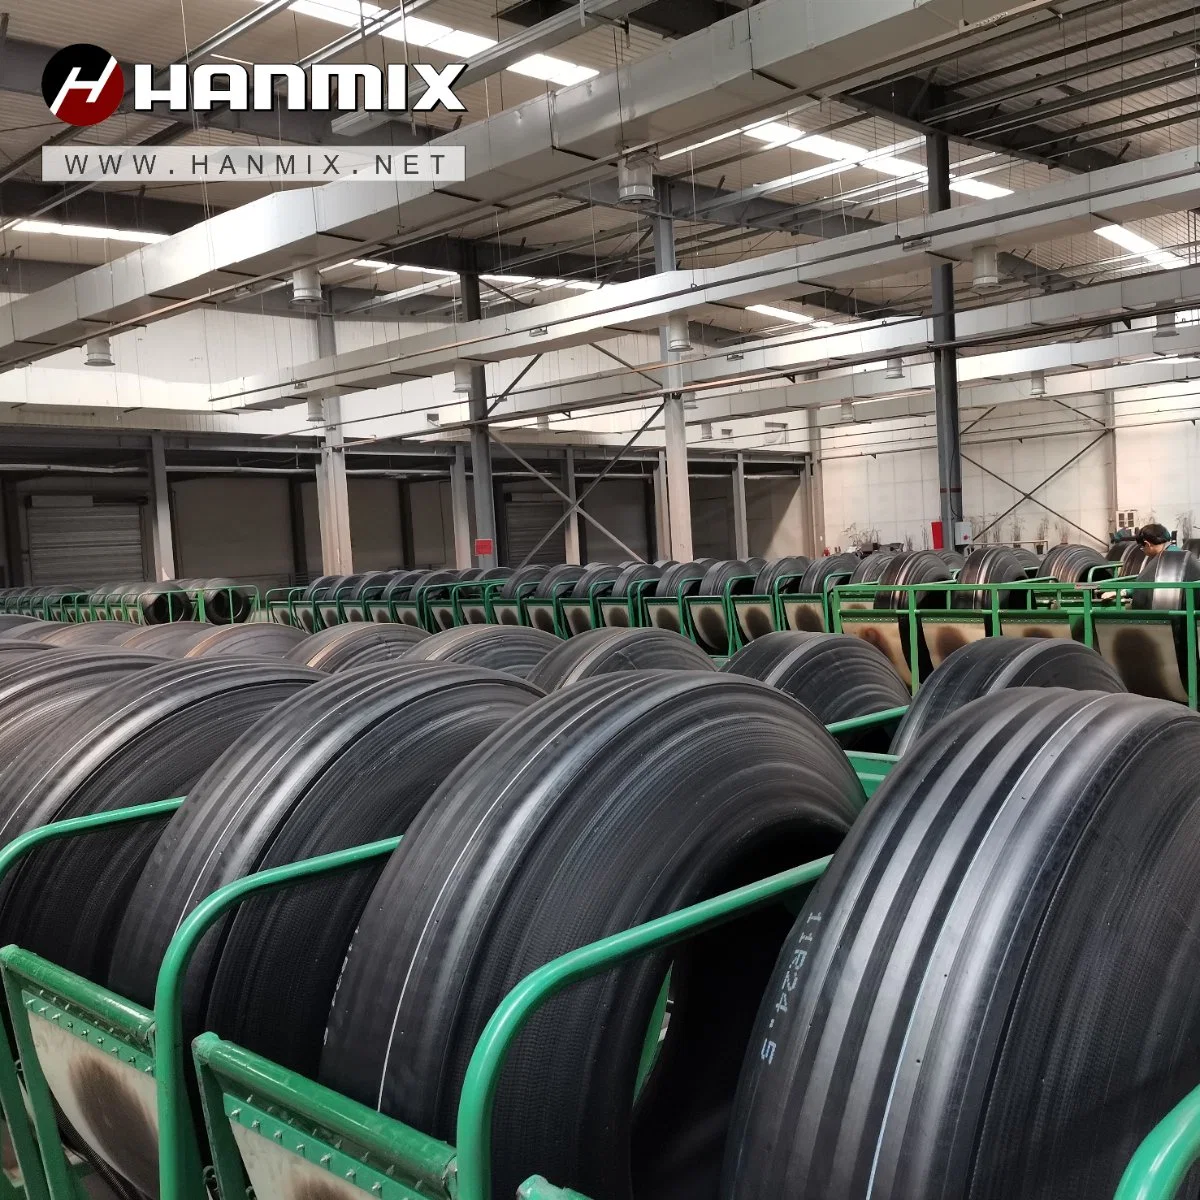 Hanmix All Steel Radial Long Haul Heavy Duty Dump Bus LTR TBR Truck Tires 6.50r16 7.00r16 Lt 11r22.5 12r22.5